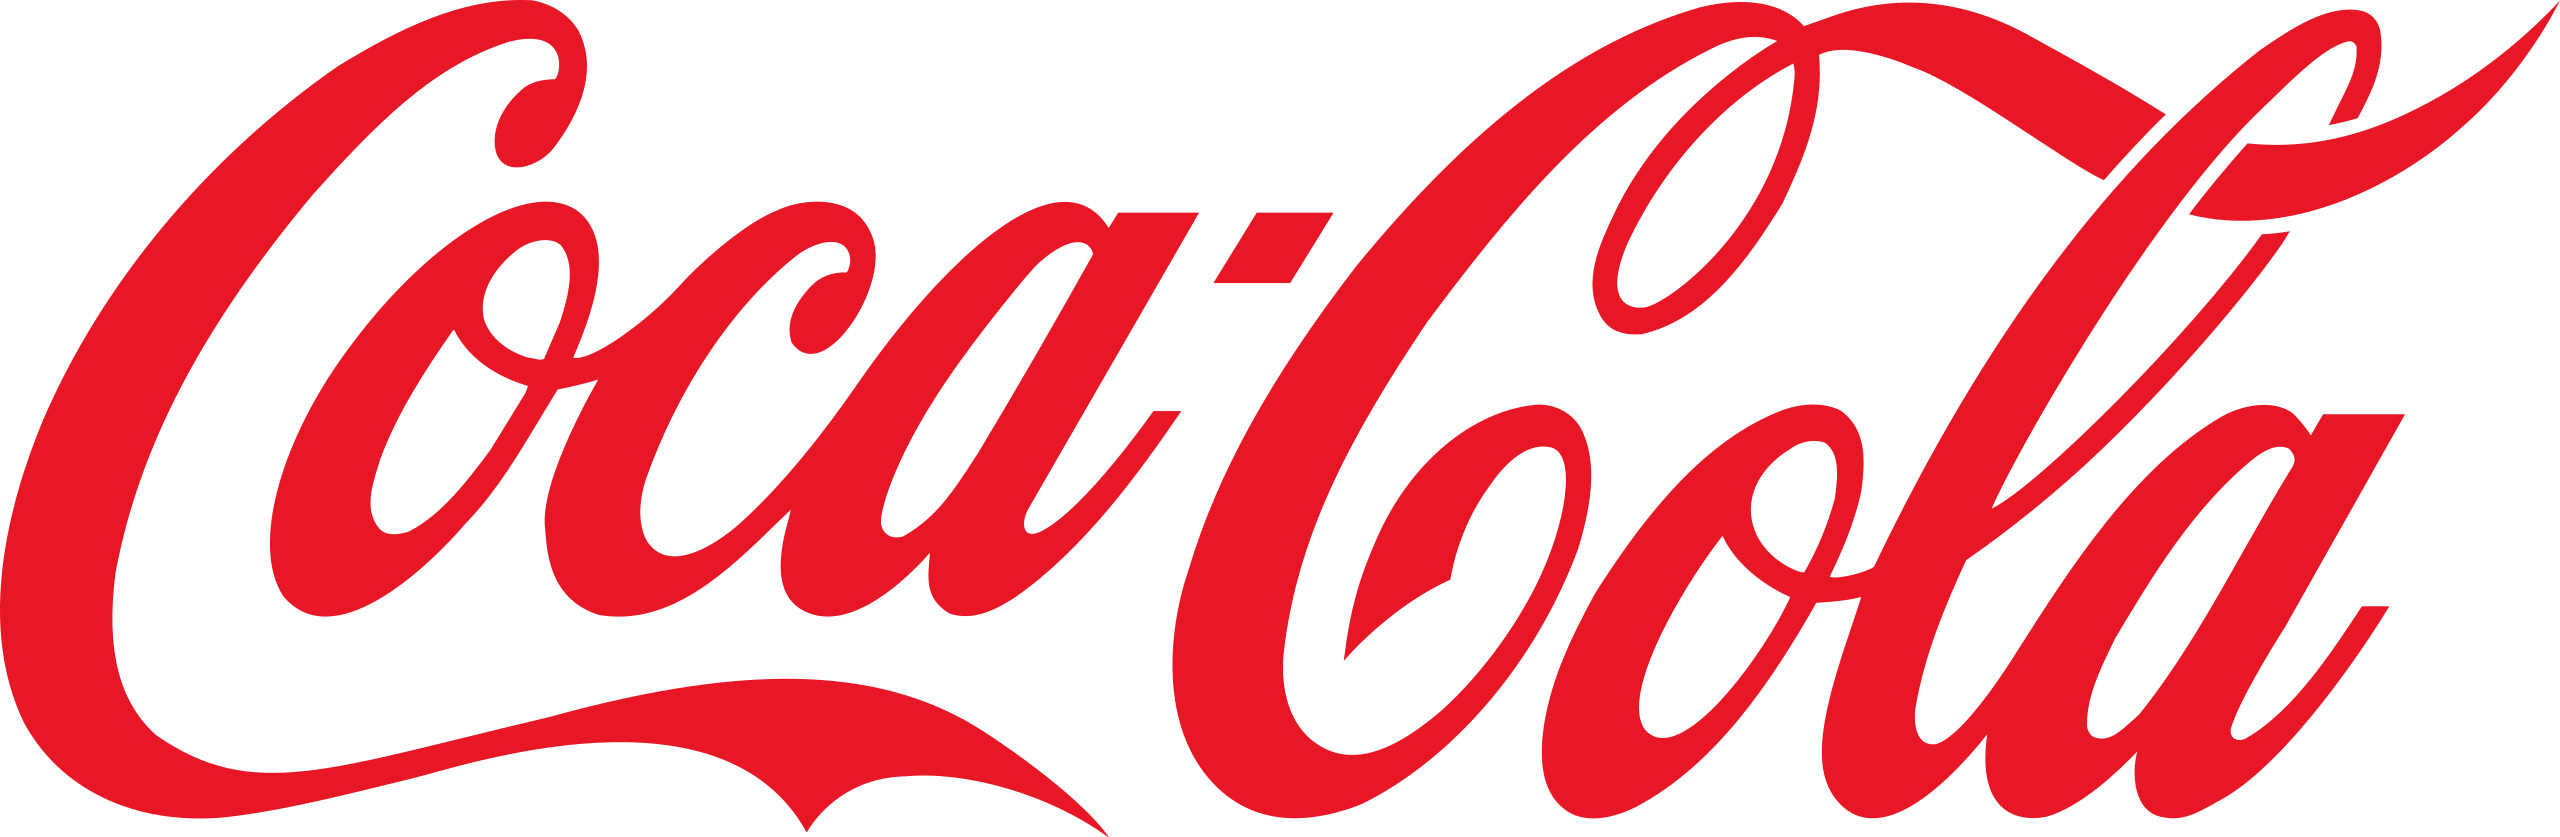 Logo Coca-Cola